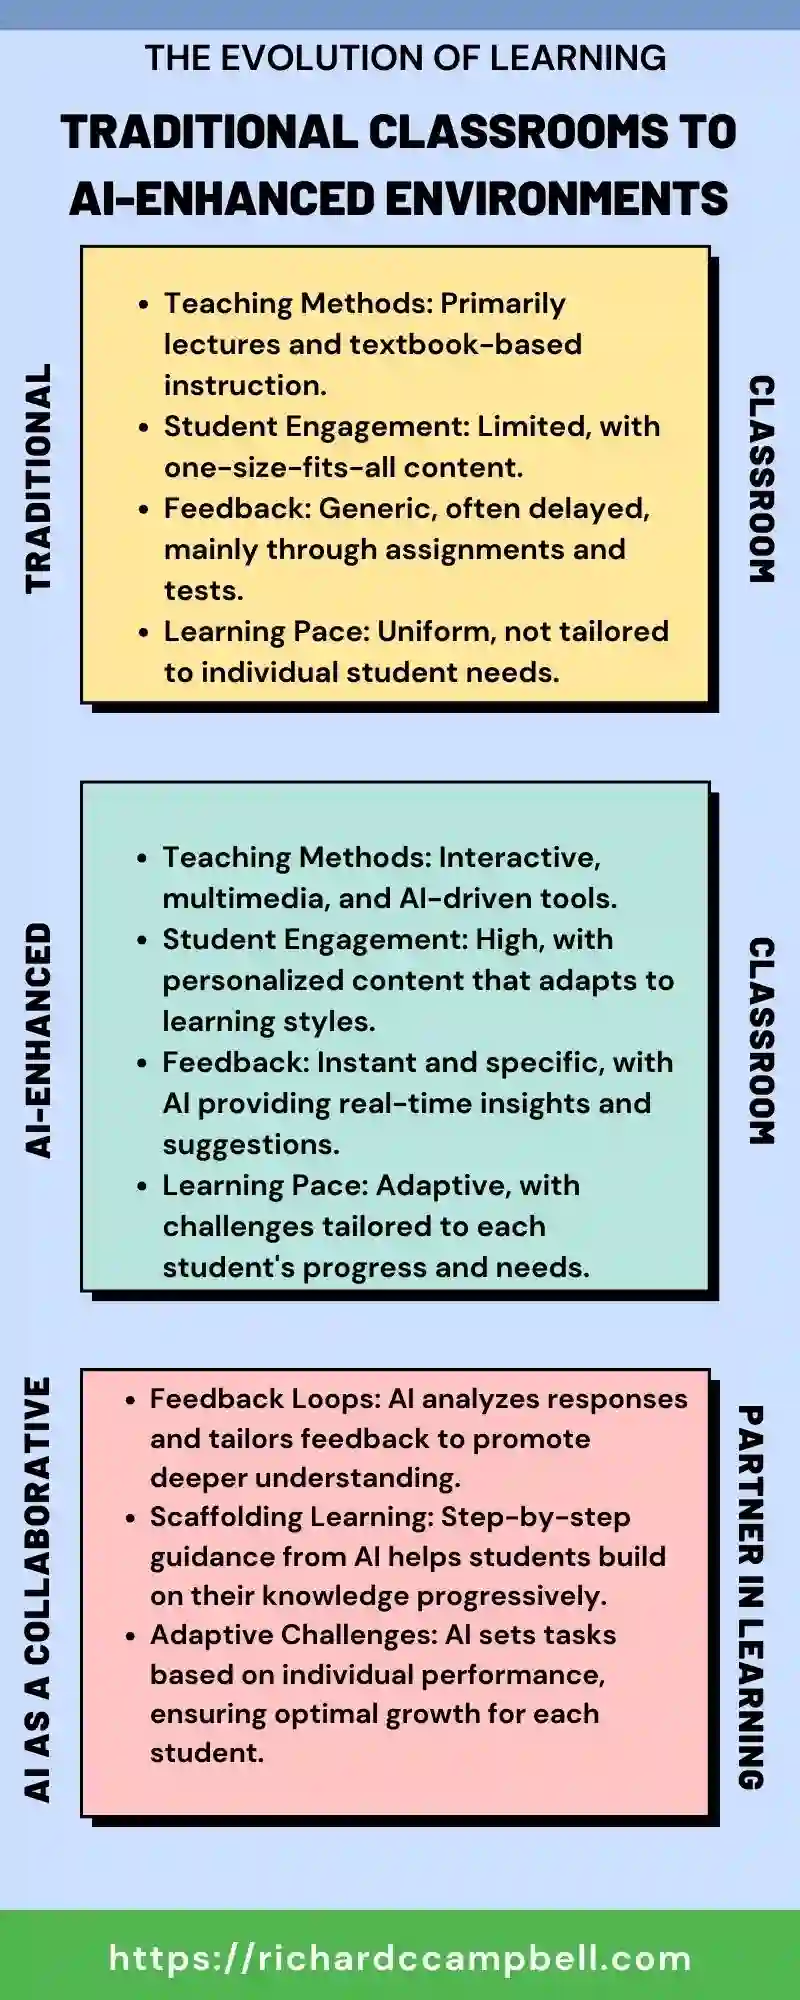 The role of teachers in the AI Era